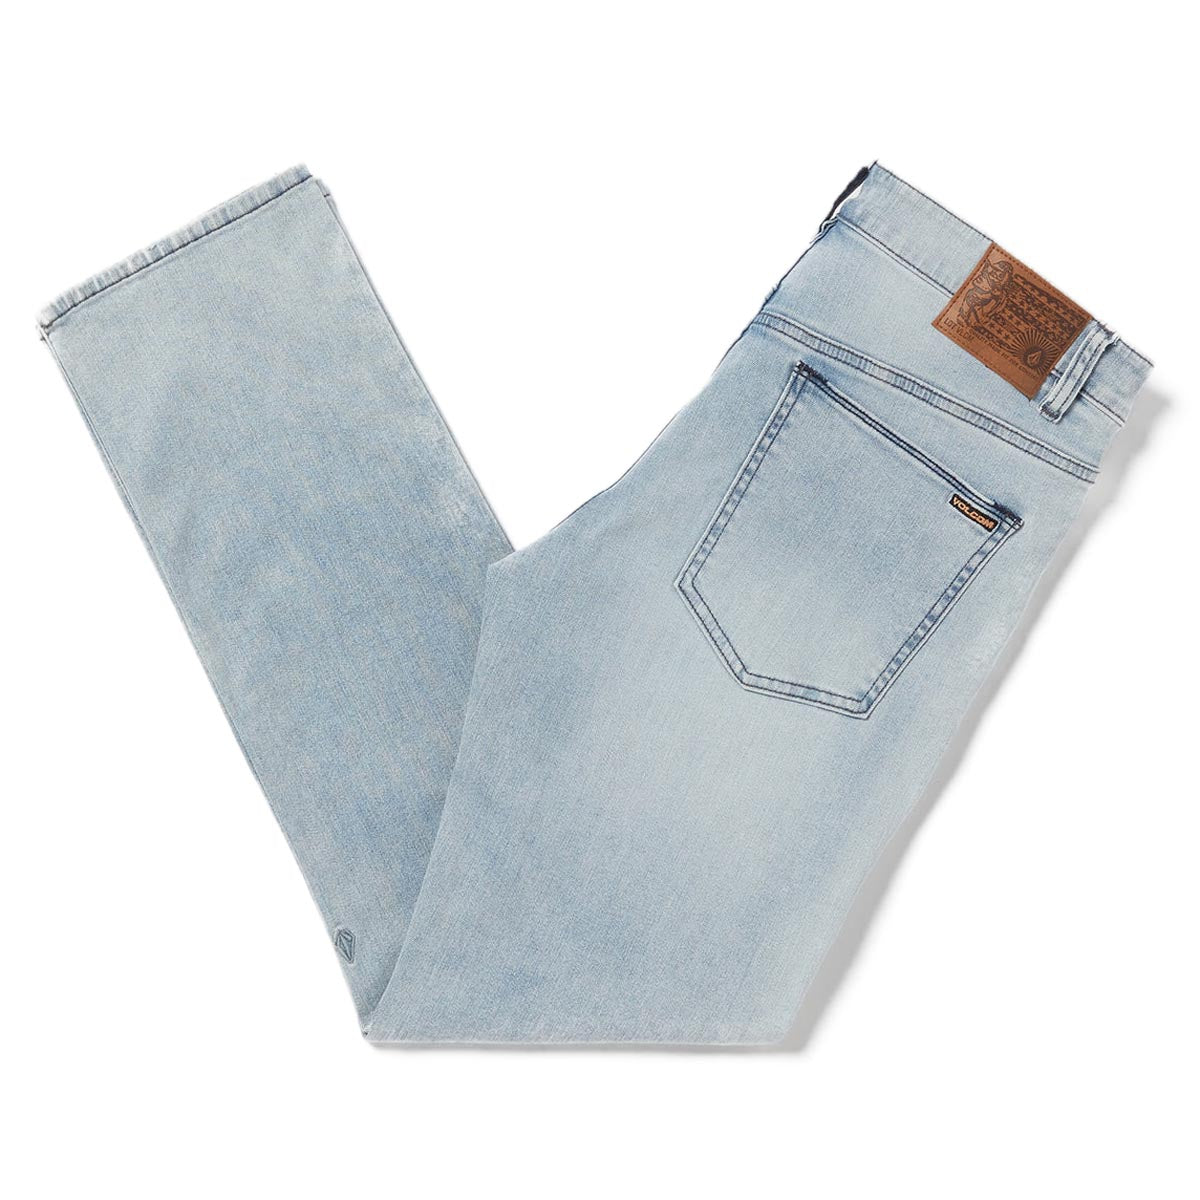 Volcom Solver Denim Jeans - Powder Blue image 2